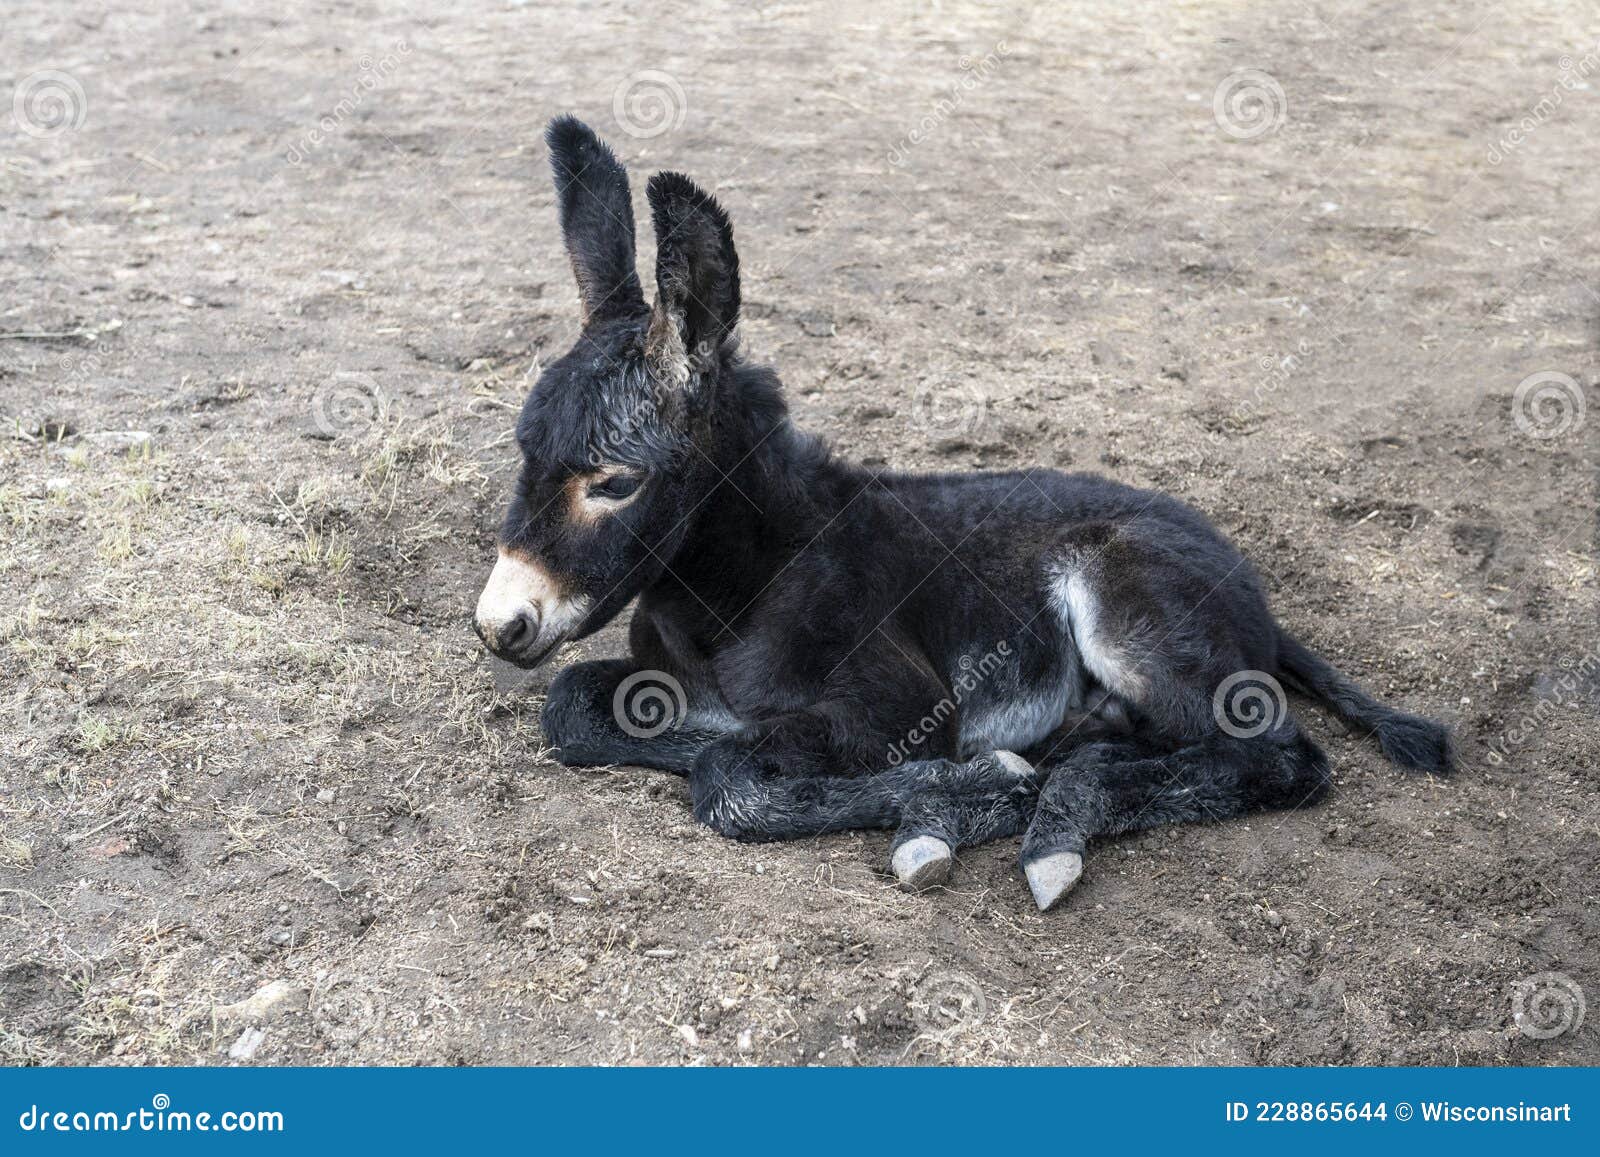 cute baby donkey, burro, farm animal